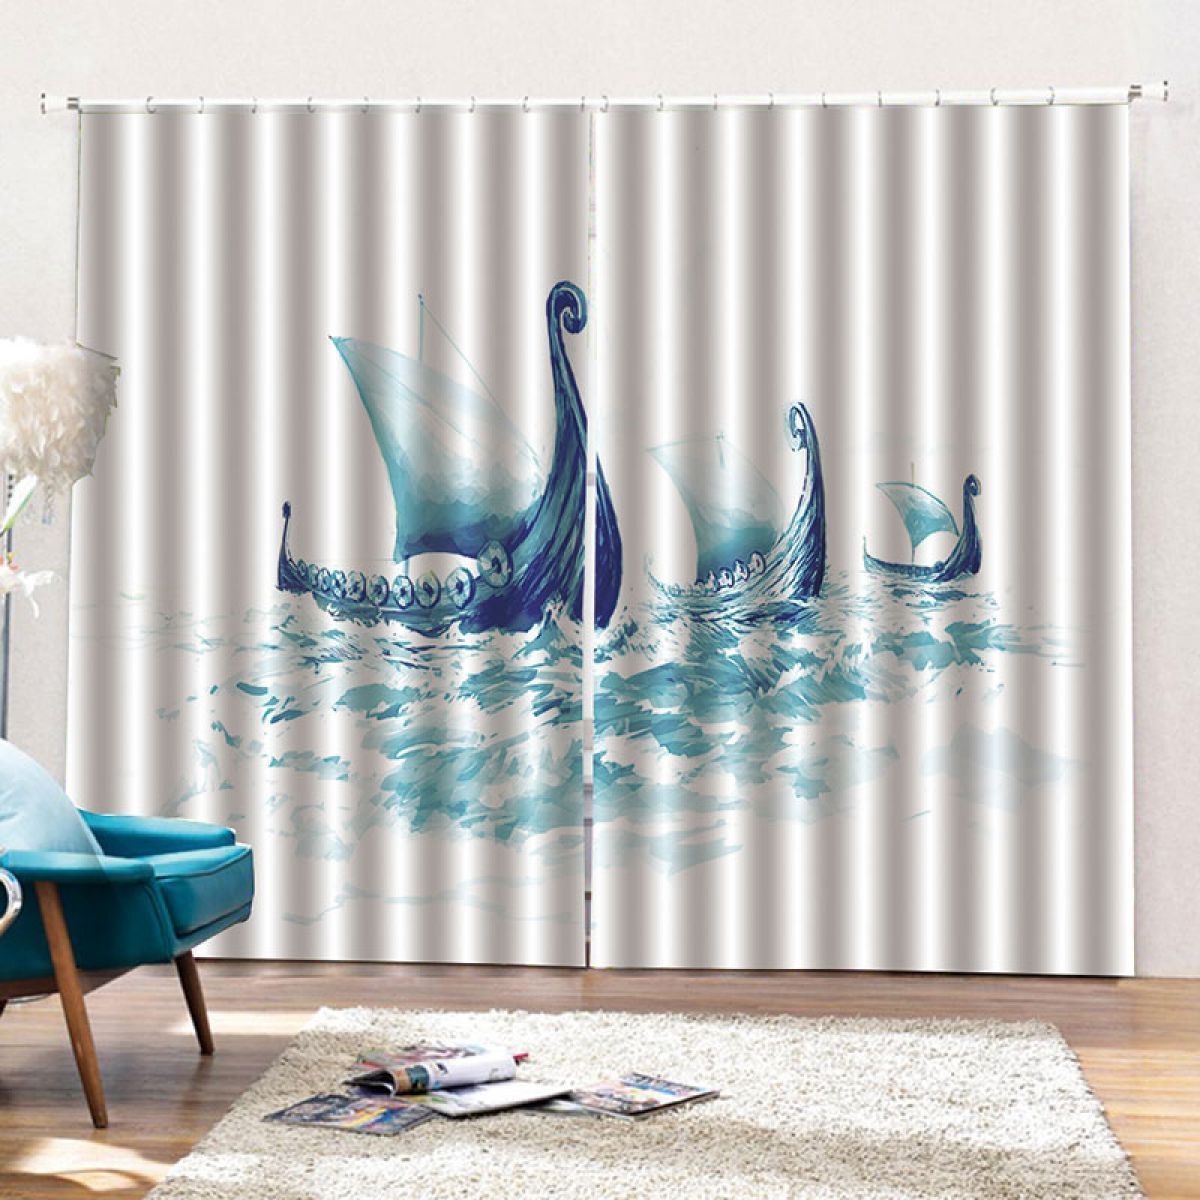 3d sailboat printed window curtain home decor 6667